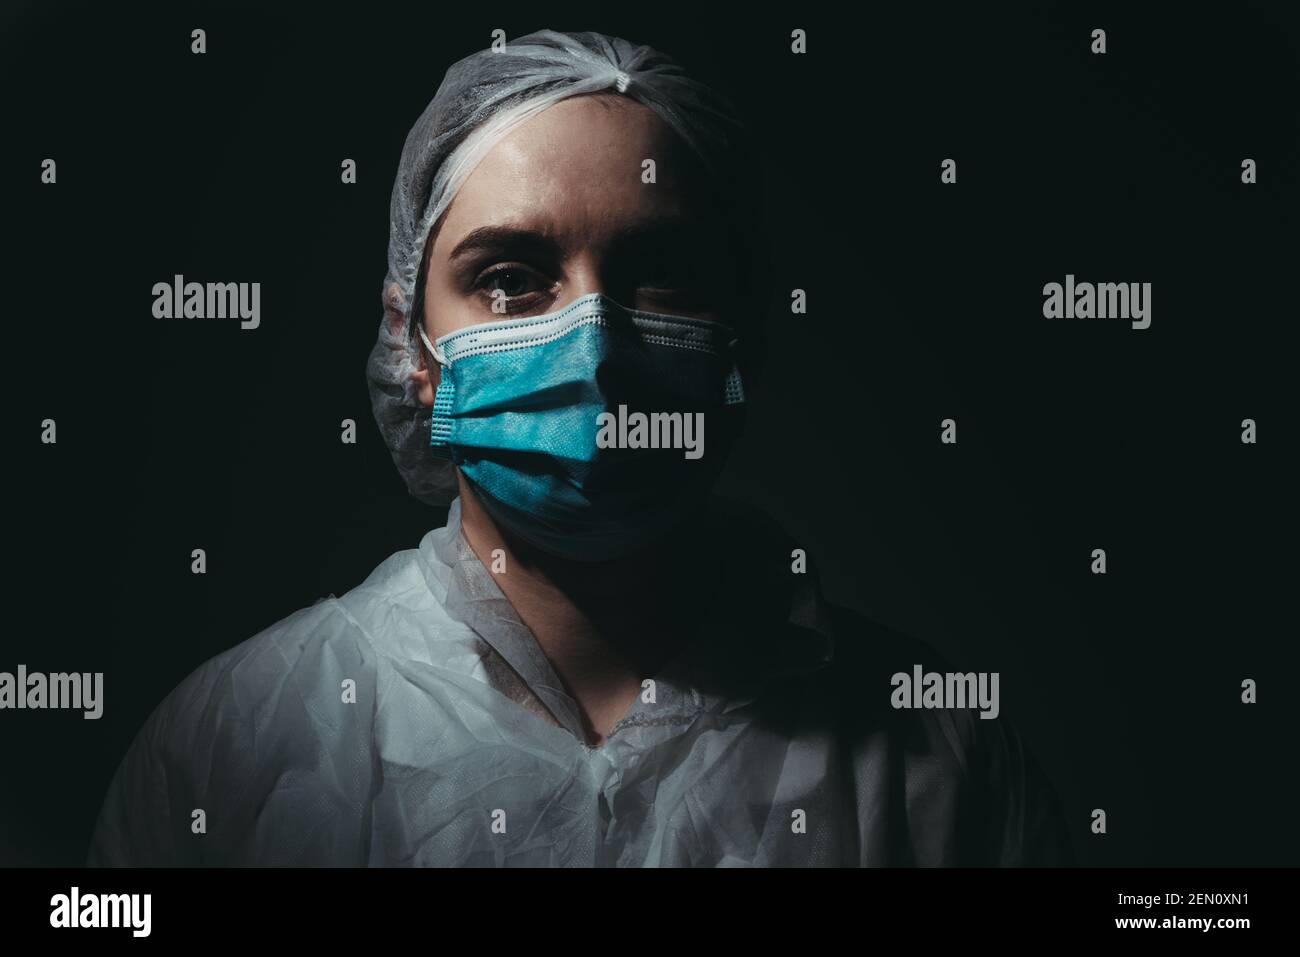 Medical worker wearing medical mask on black background Stock Photo